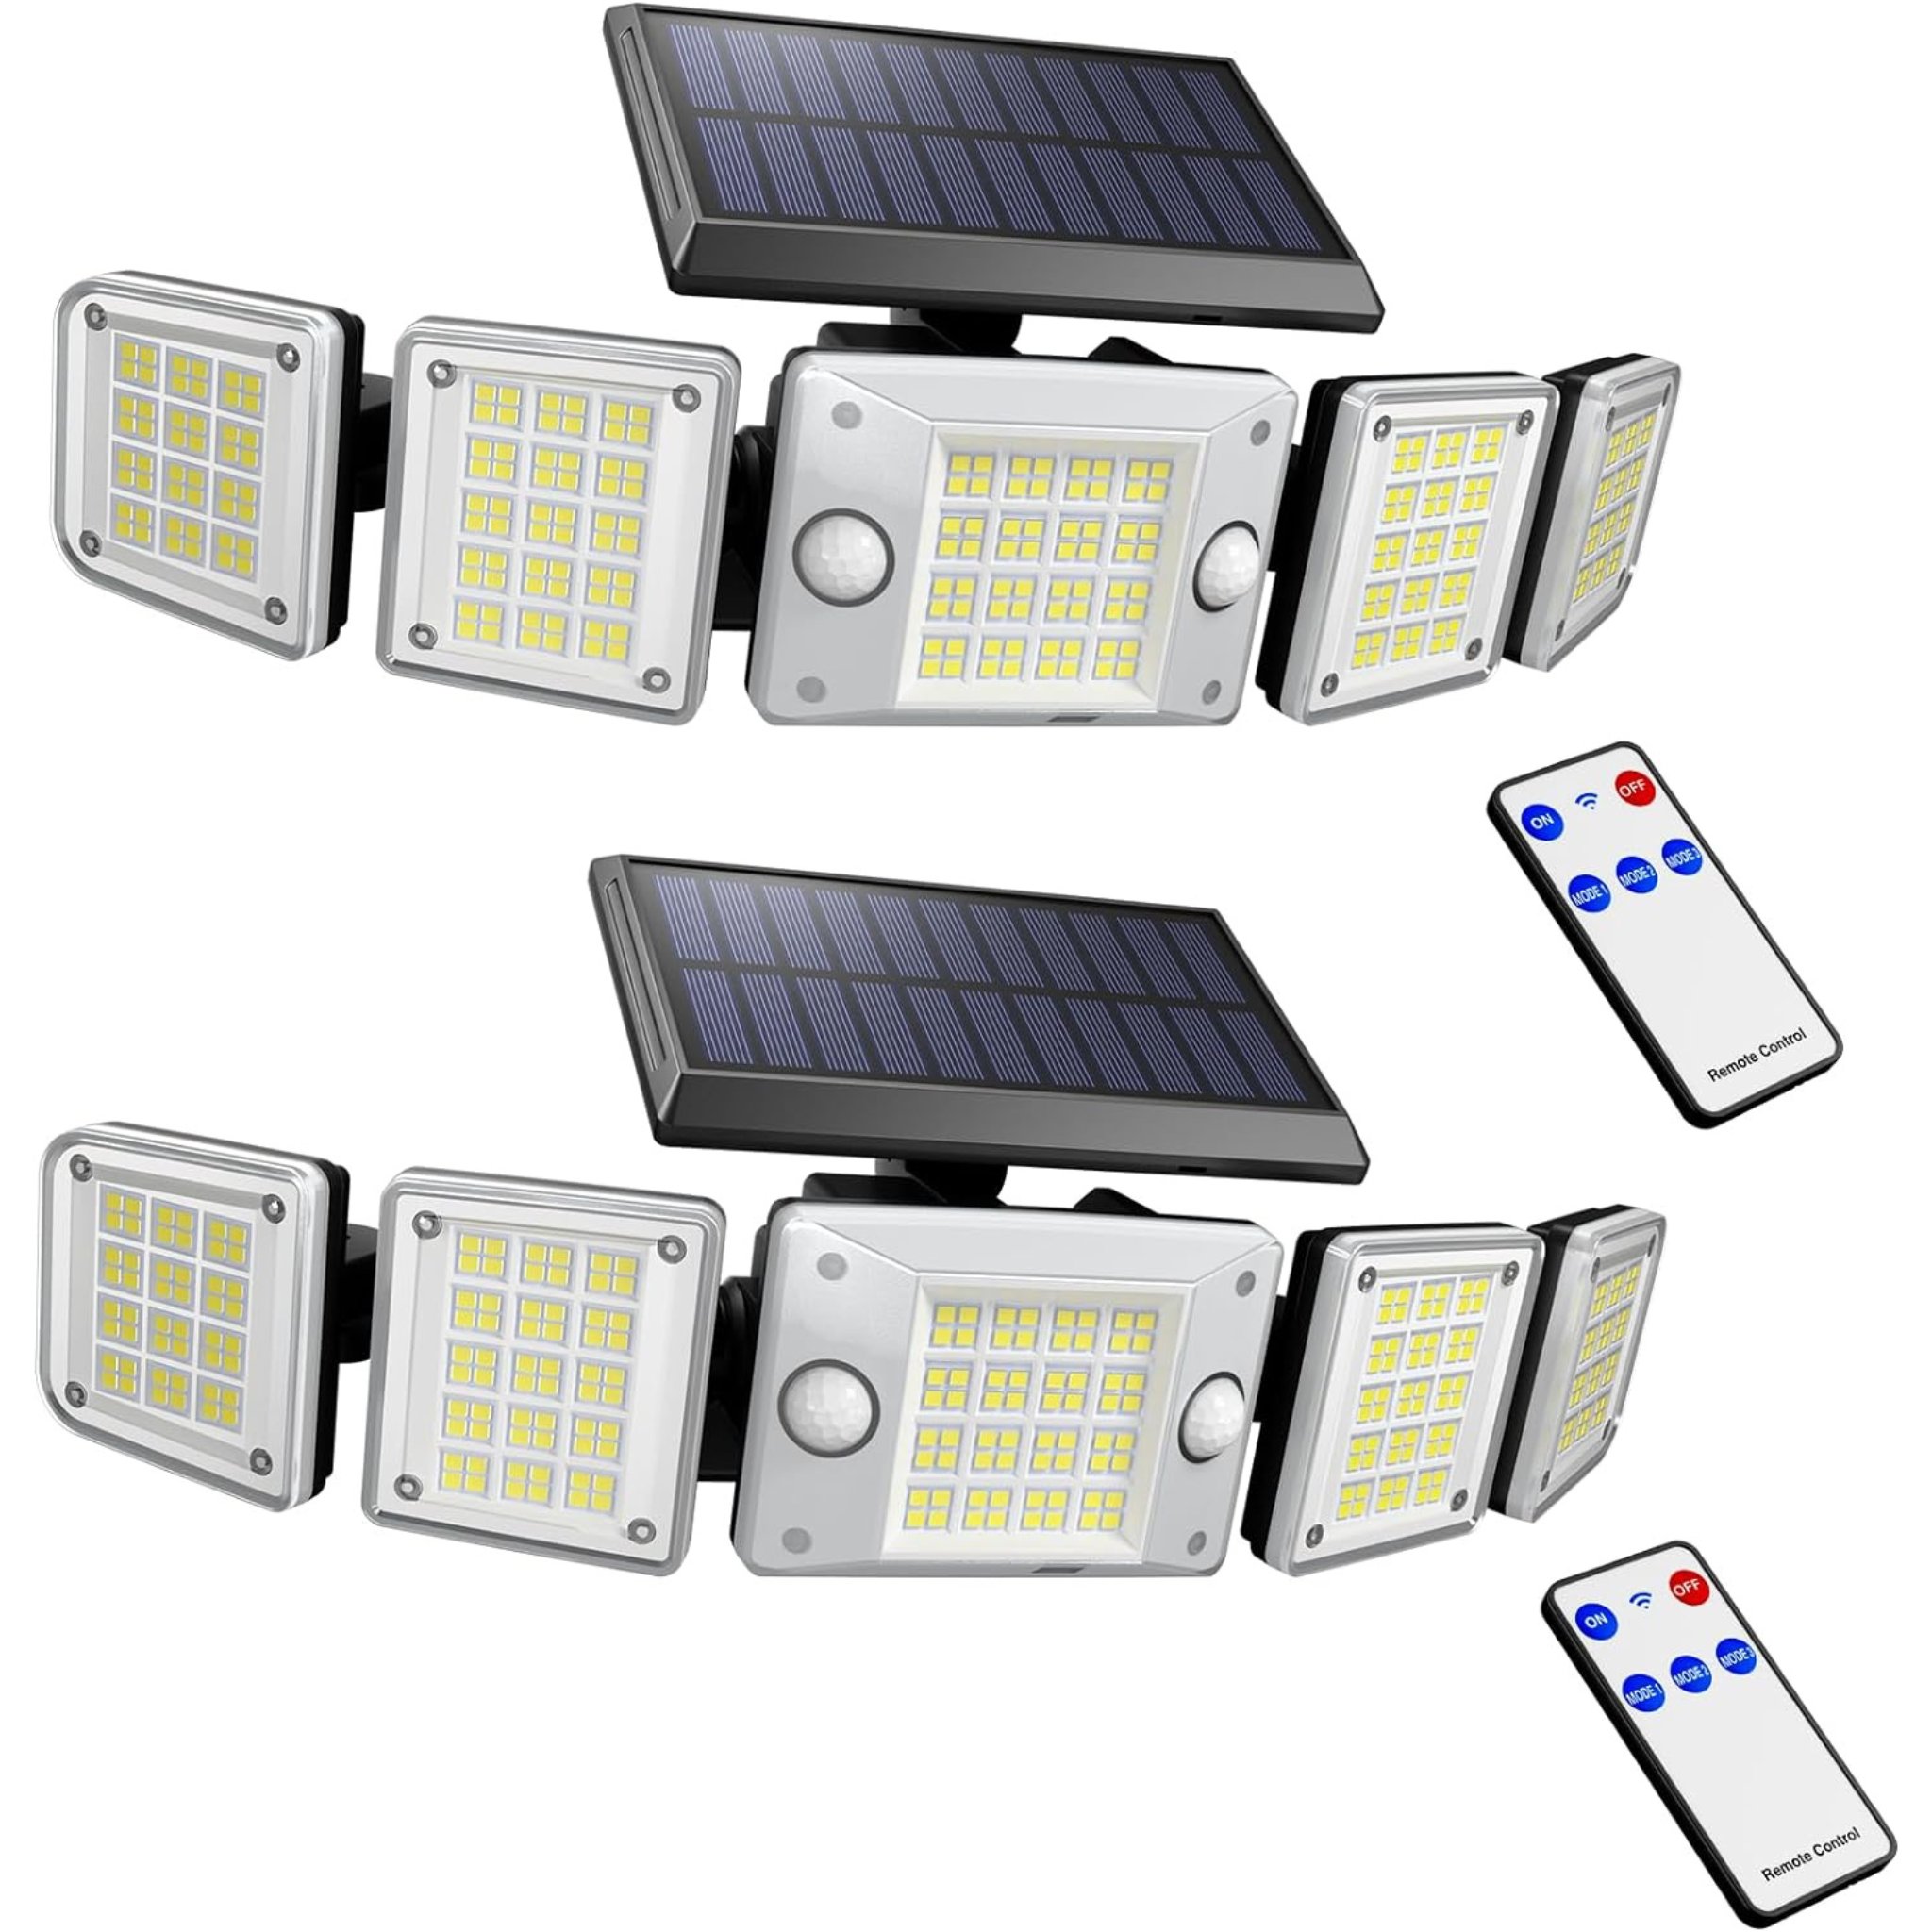 2-Pack Onforu IP65 Waterproof 5W 3000LM 280 LED Solar Lights